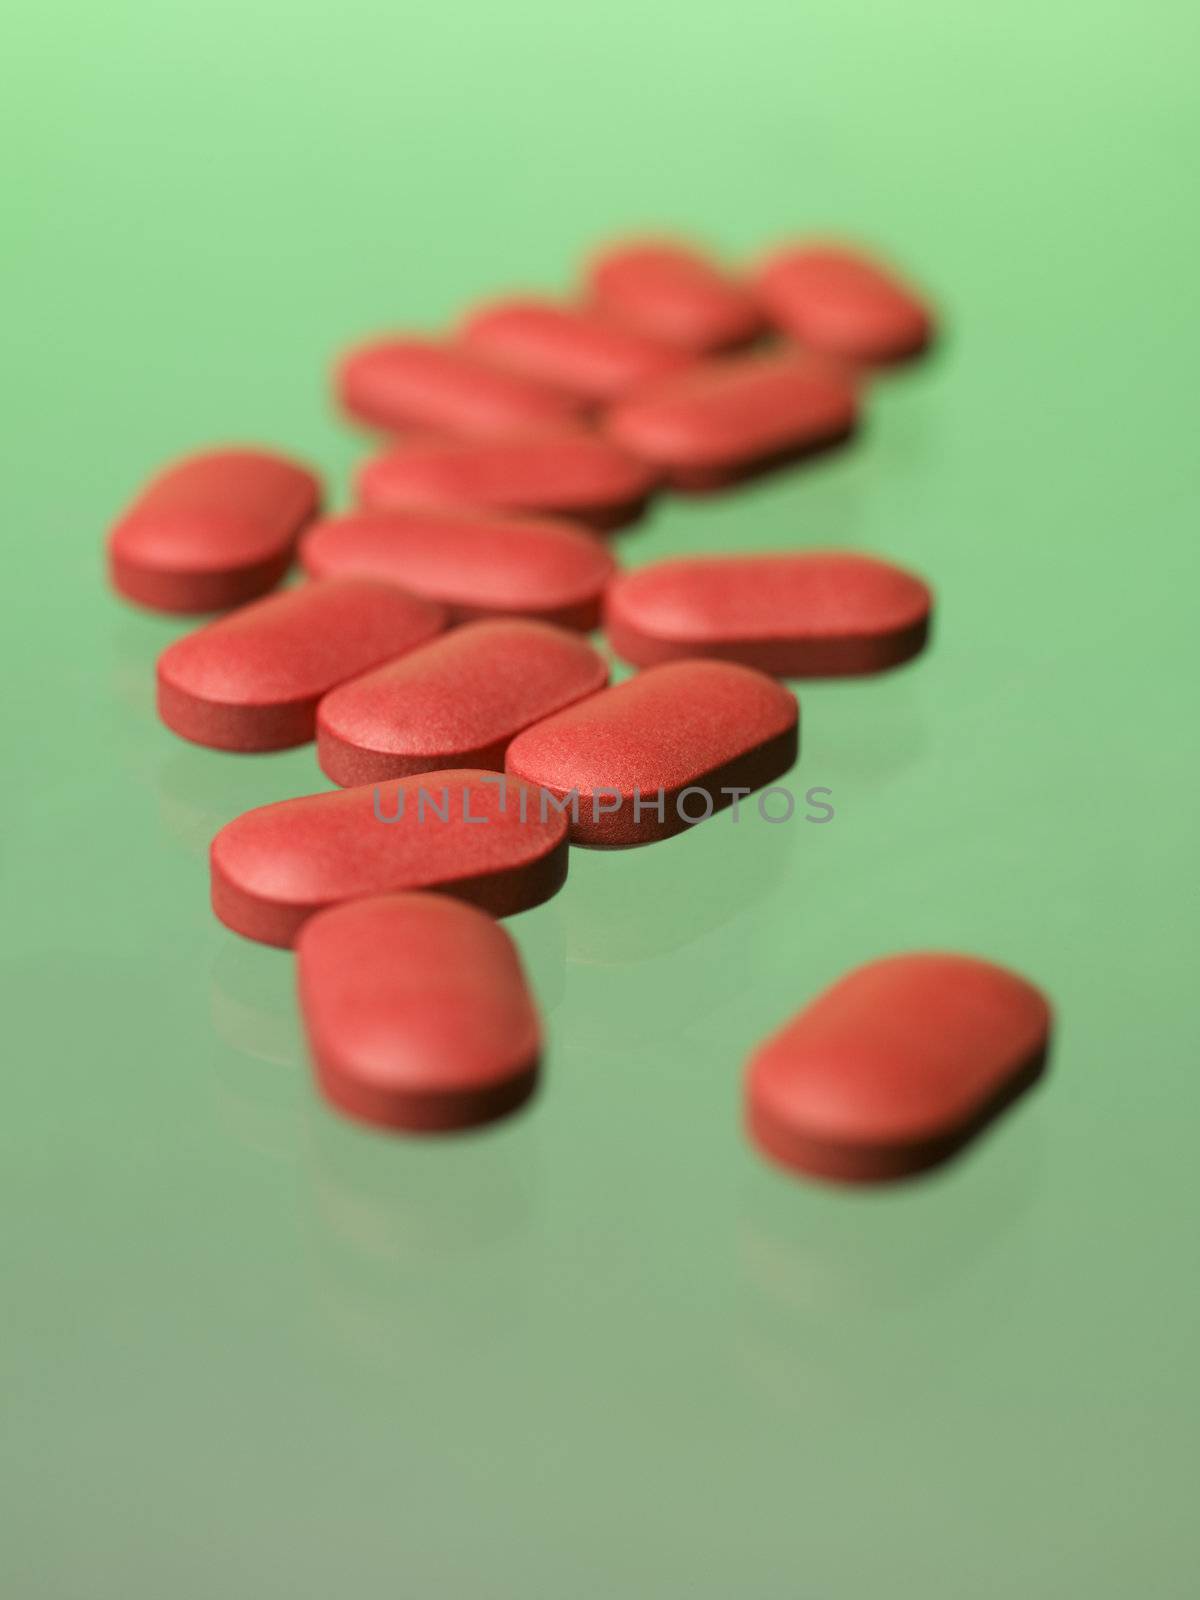 Red pills toward green background